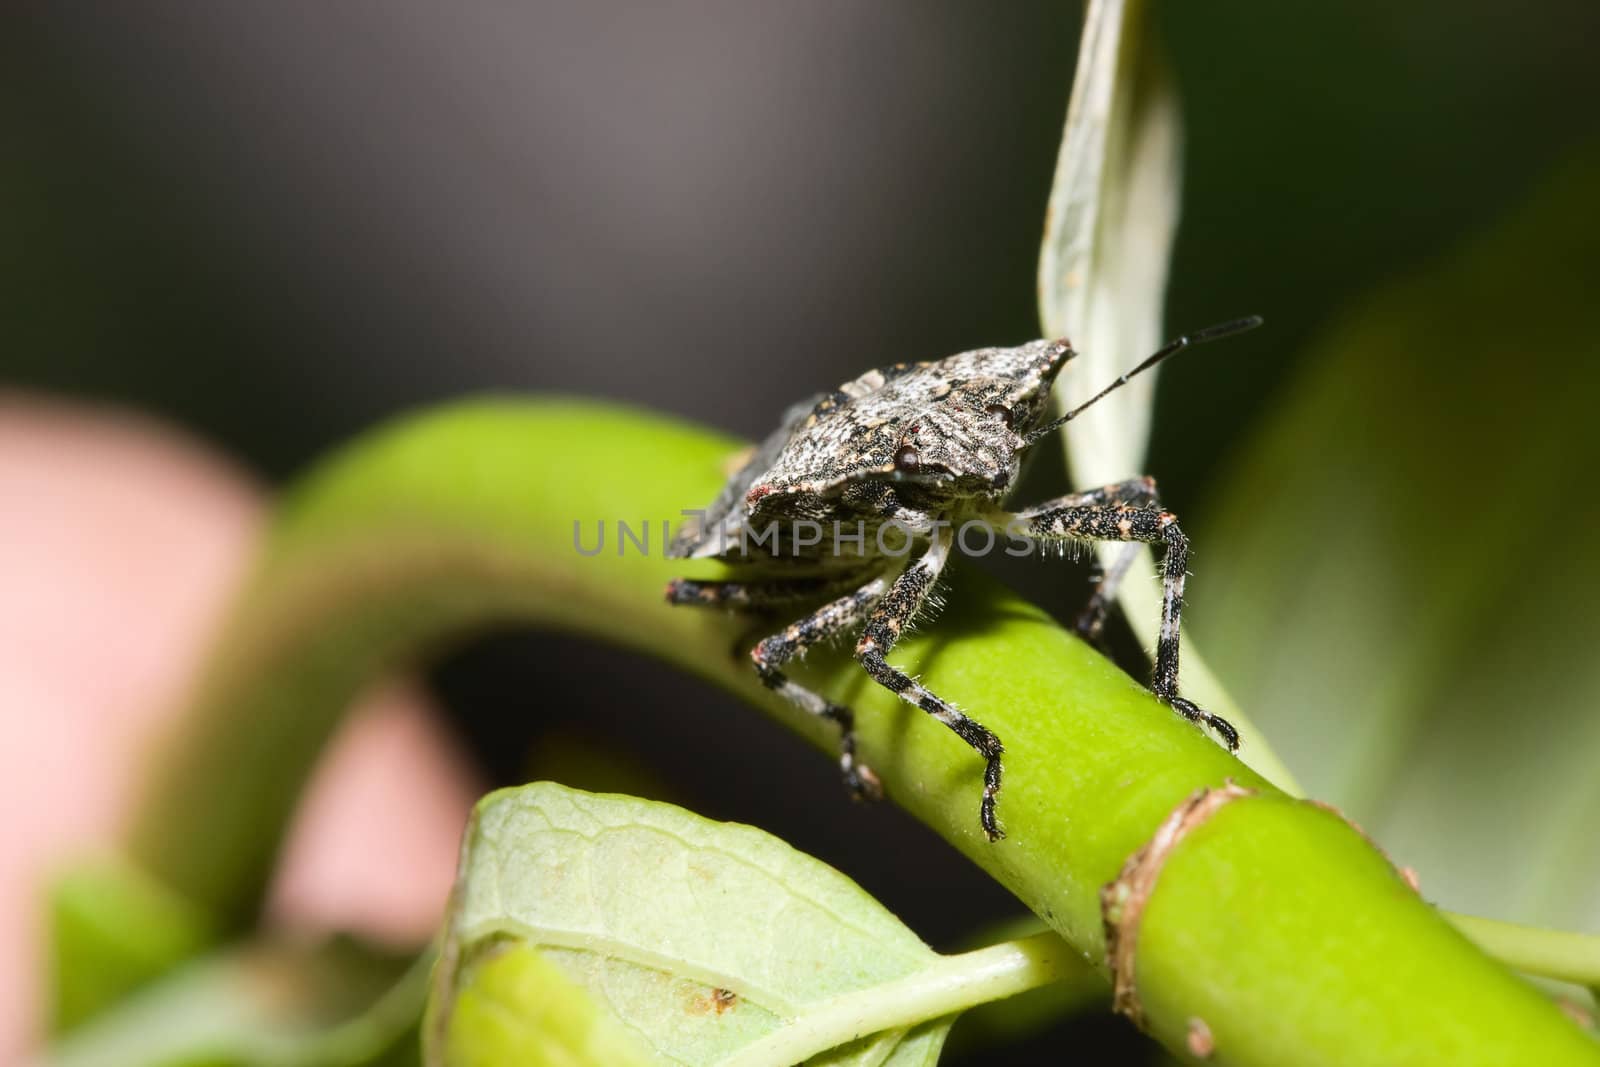 Shield bug (Hemiptera, suborder Heteroptera) by Coffee999